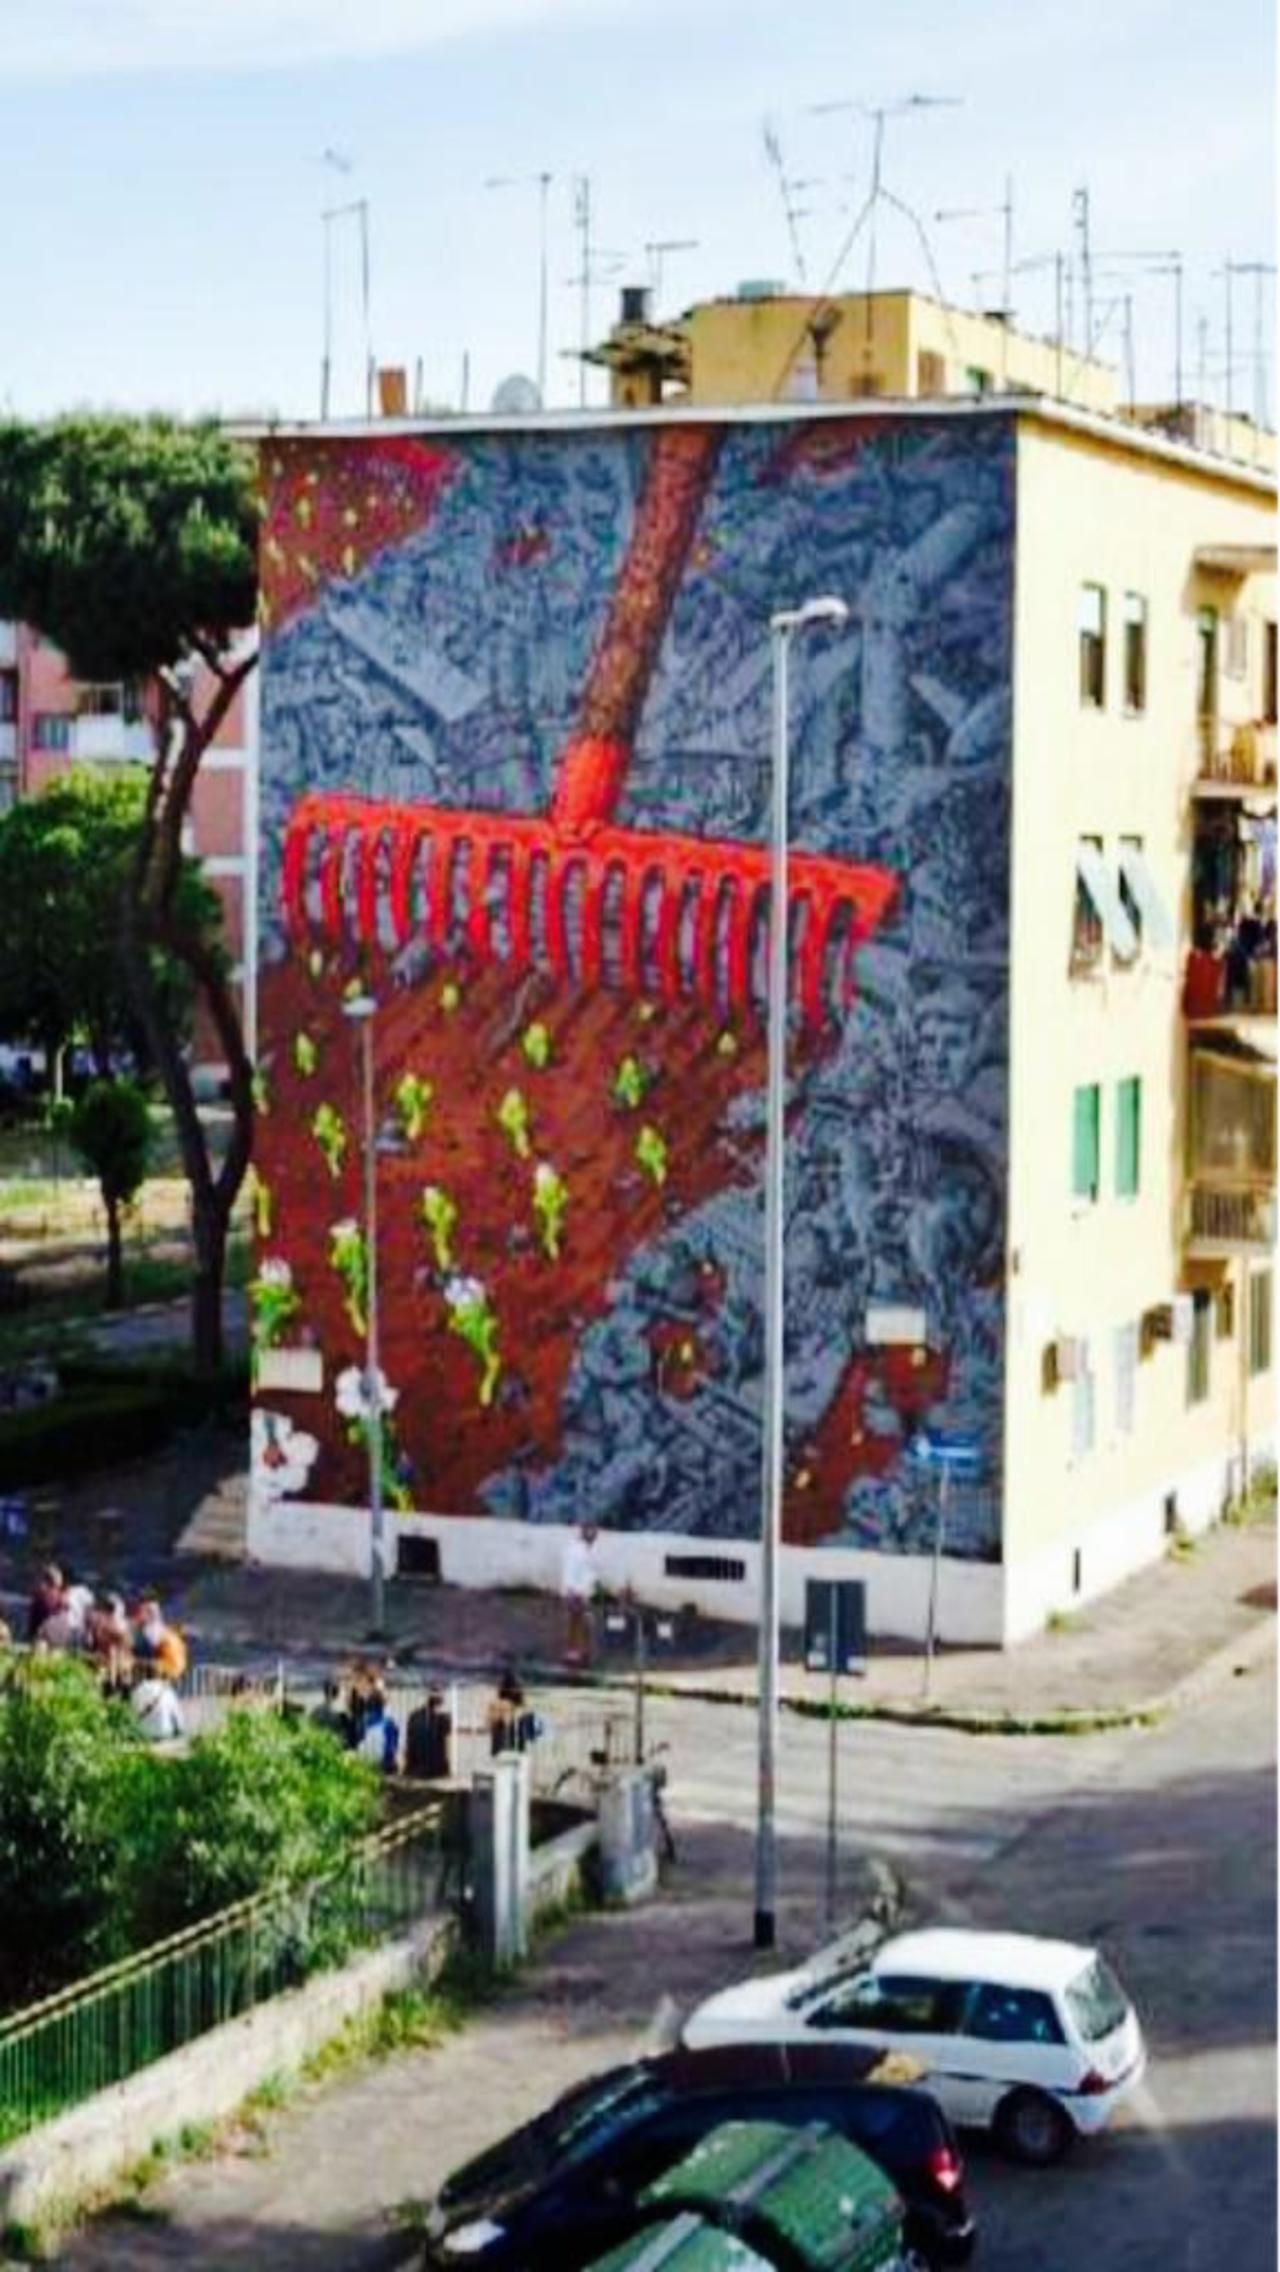 #graffiti #mural #murales #streetart #stencil #sprayart #urbanart http://t.co/RsUoRFJIE5